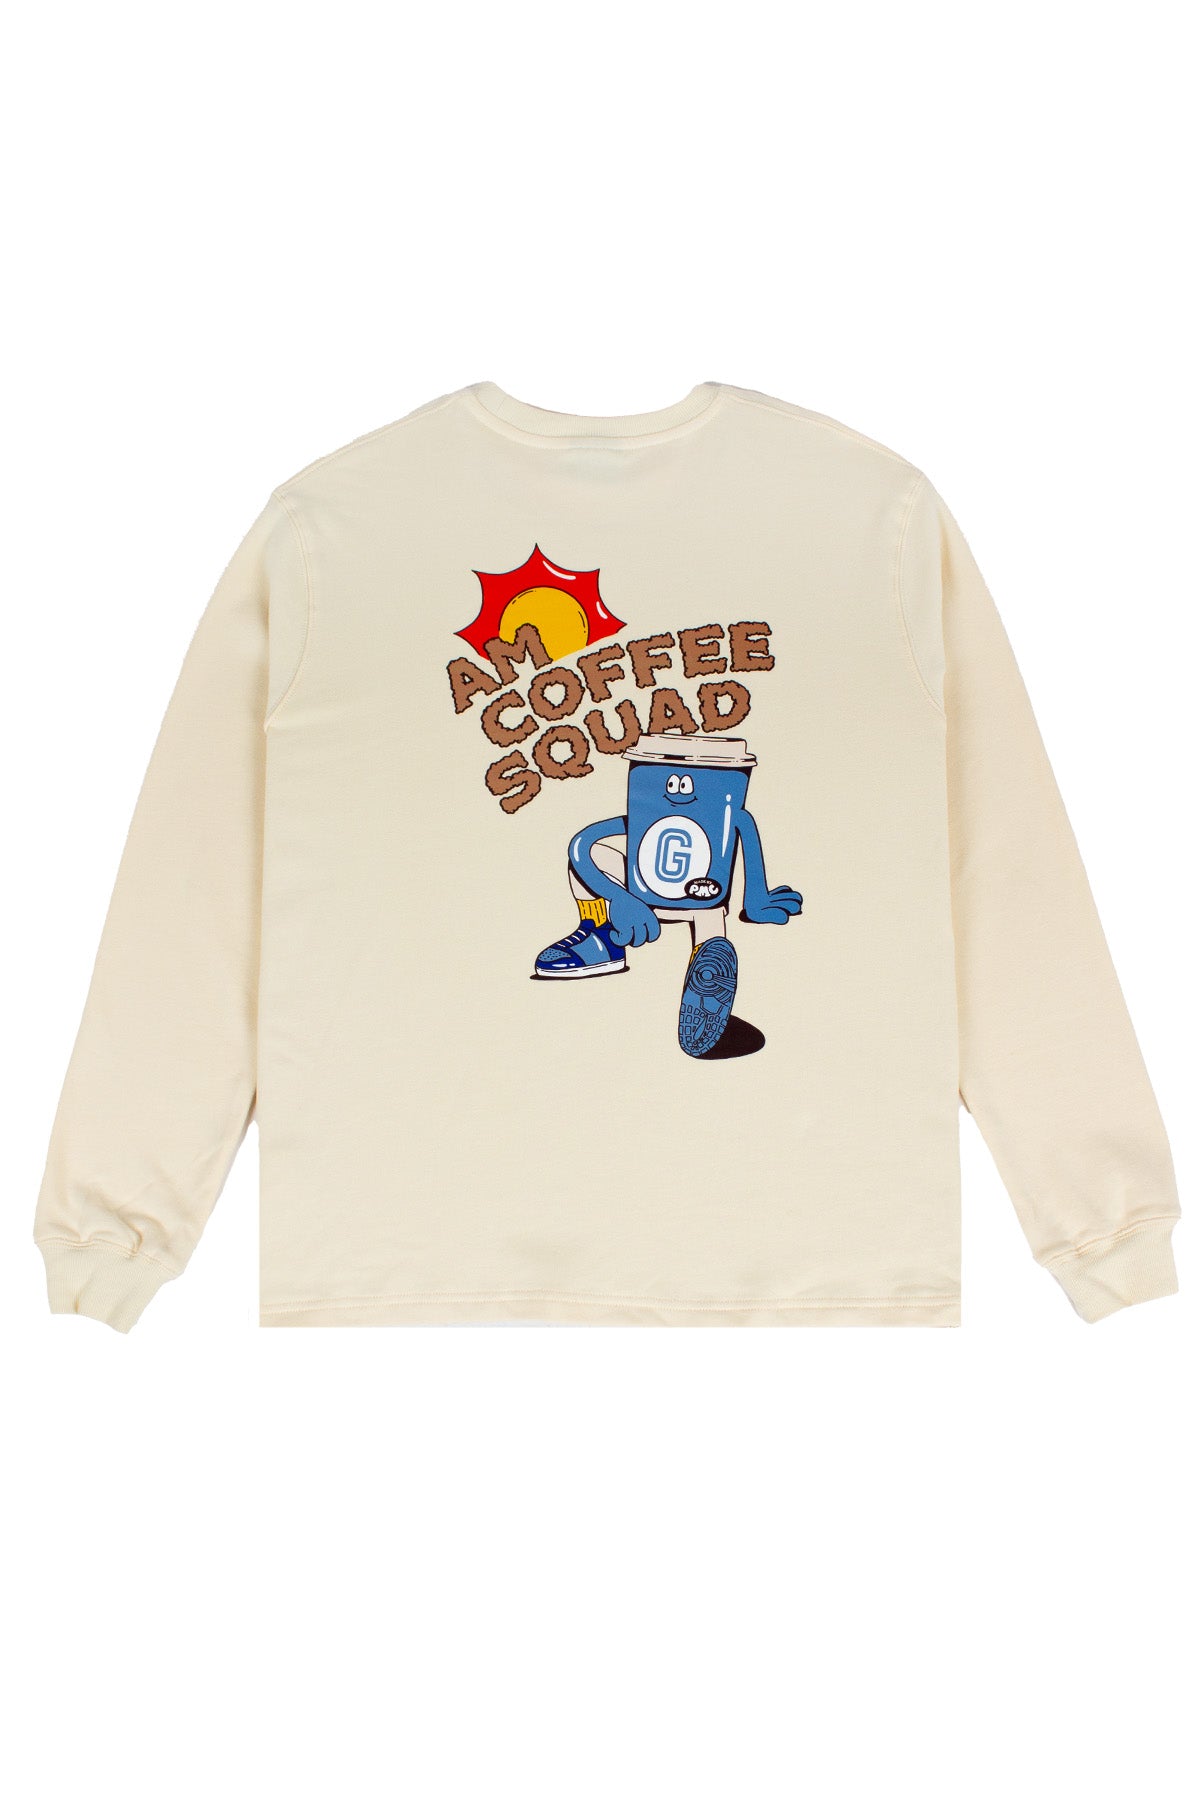 A.M. Coffee Squad Sweatshirt Cream